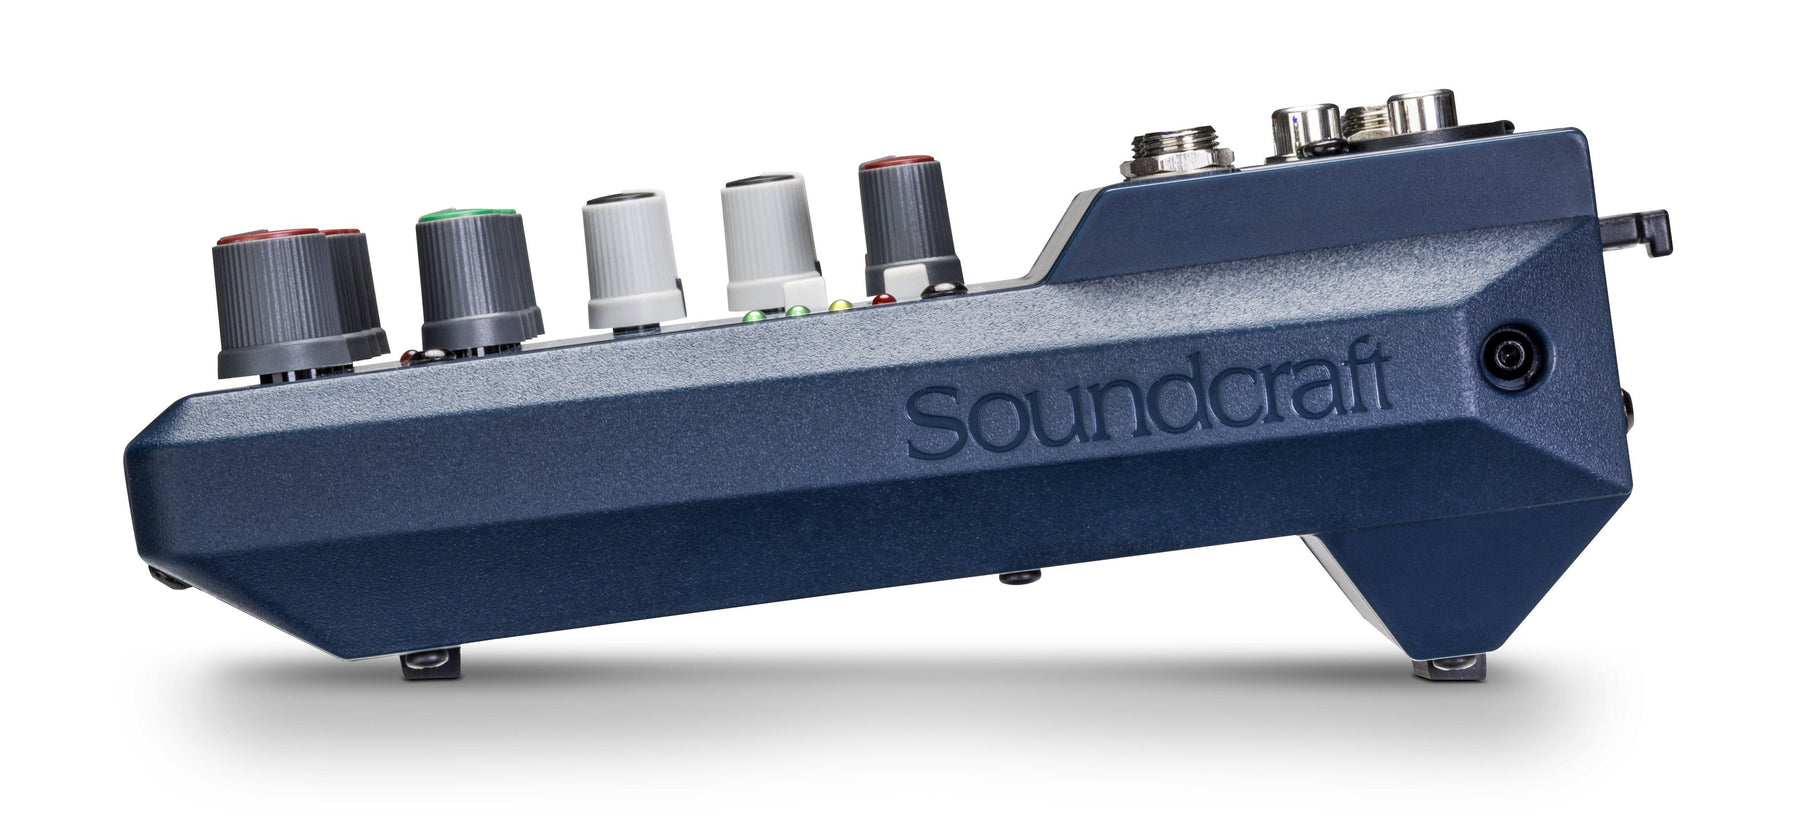 Soundcraft Notepad 5 mixing console Mixing Desks SOUN 